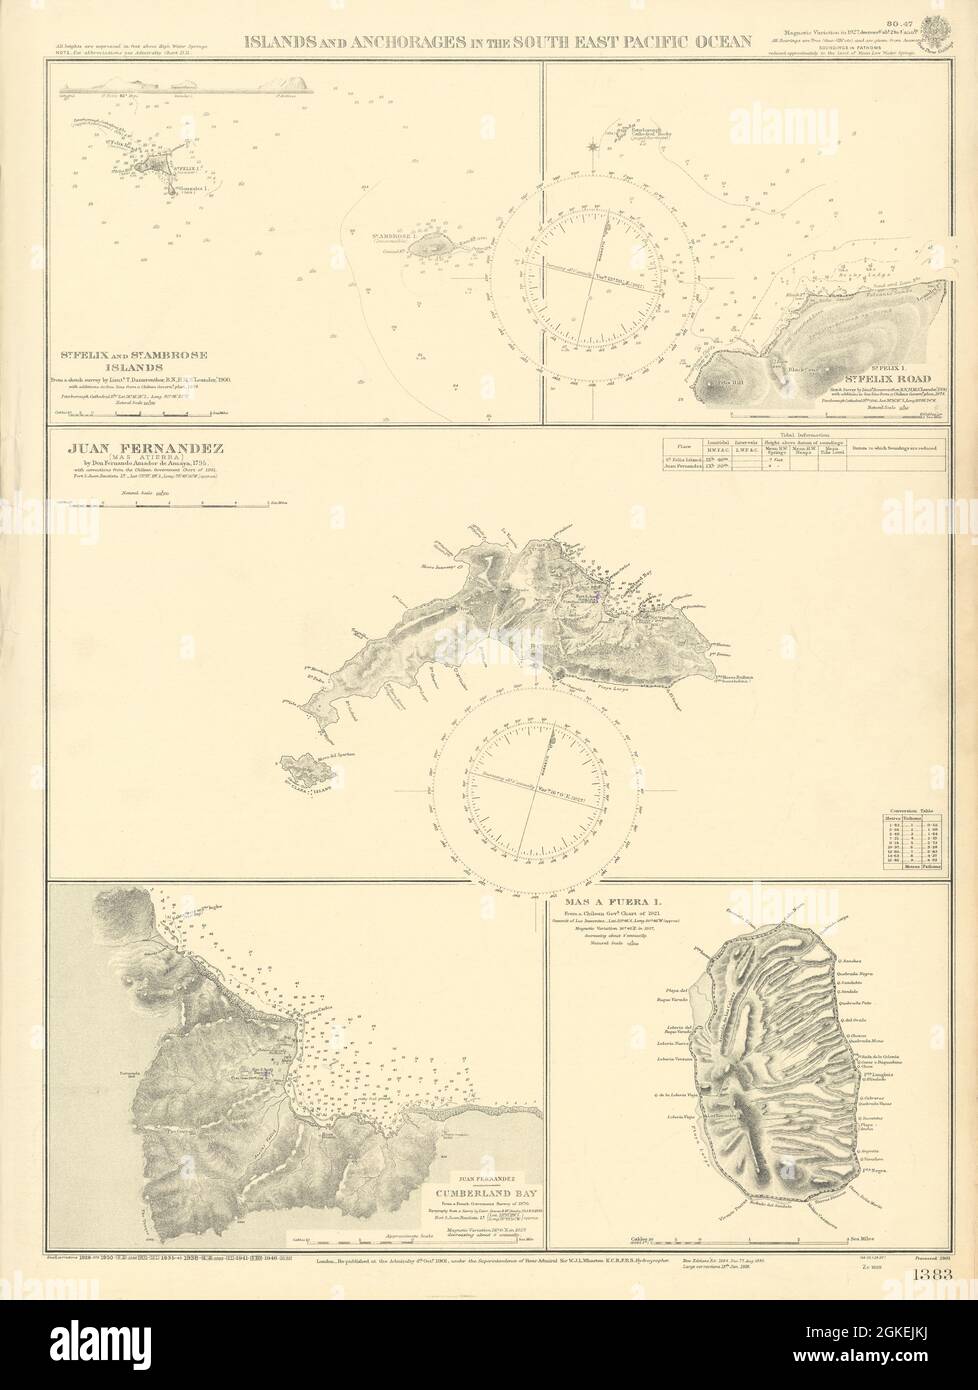 Islas Juan Fernandez Desventuradas Chile Pacific ADMIRALTY chart 1901 (1946) map Stock Photo